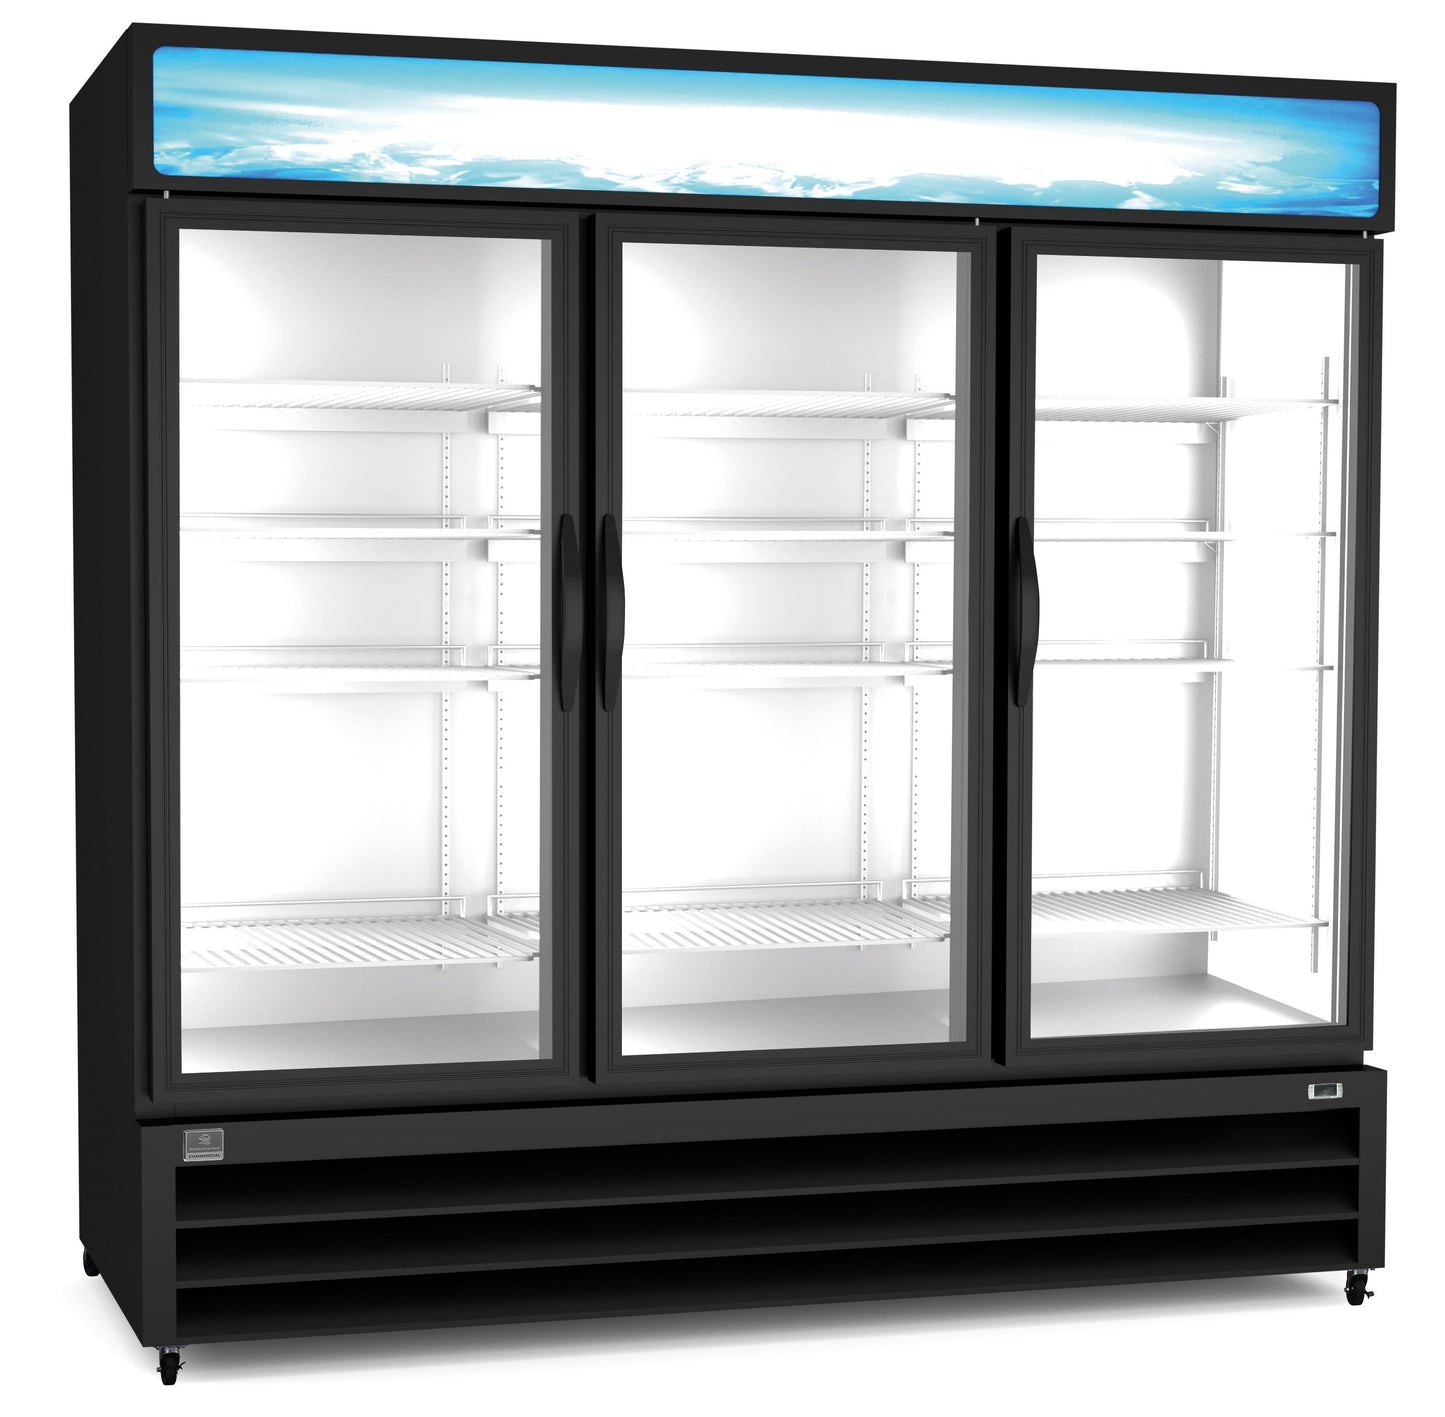 Refrigerated Merchandiser Kelvinator Commercial Model KCHGM72R